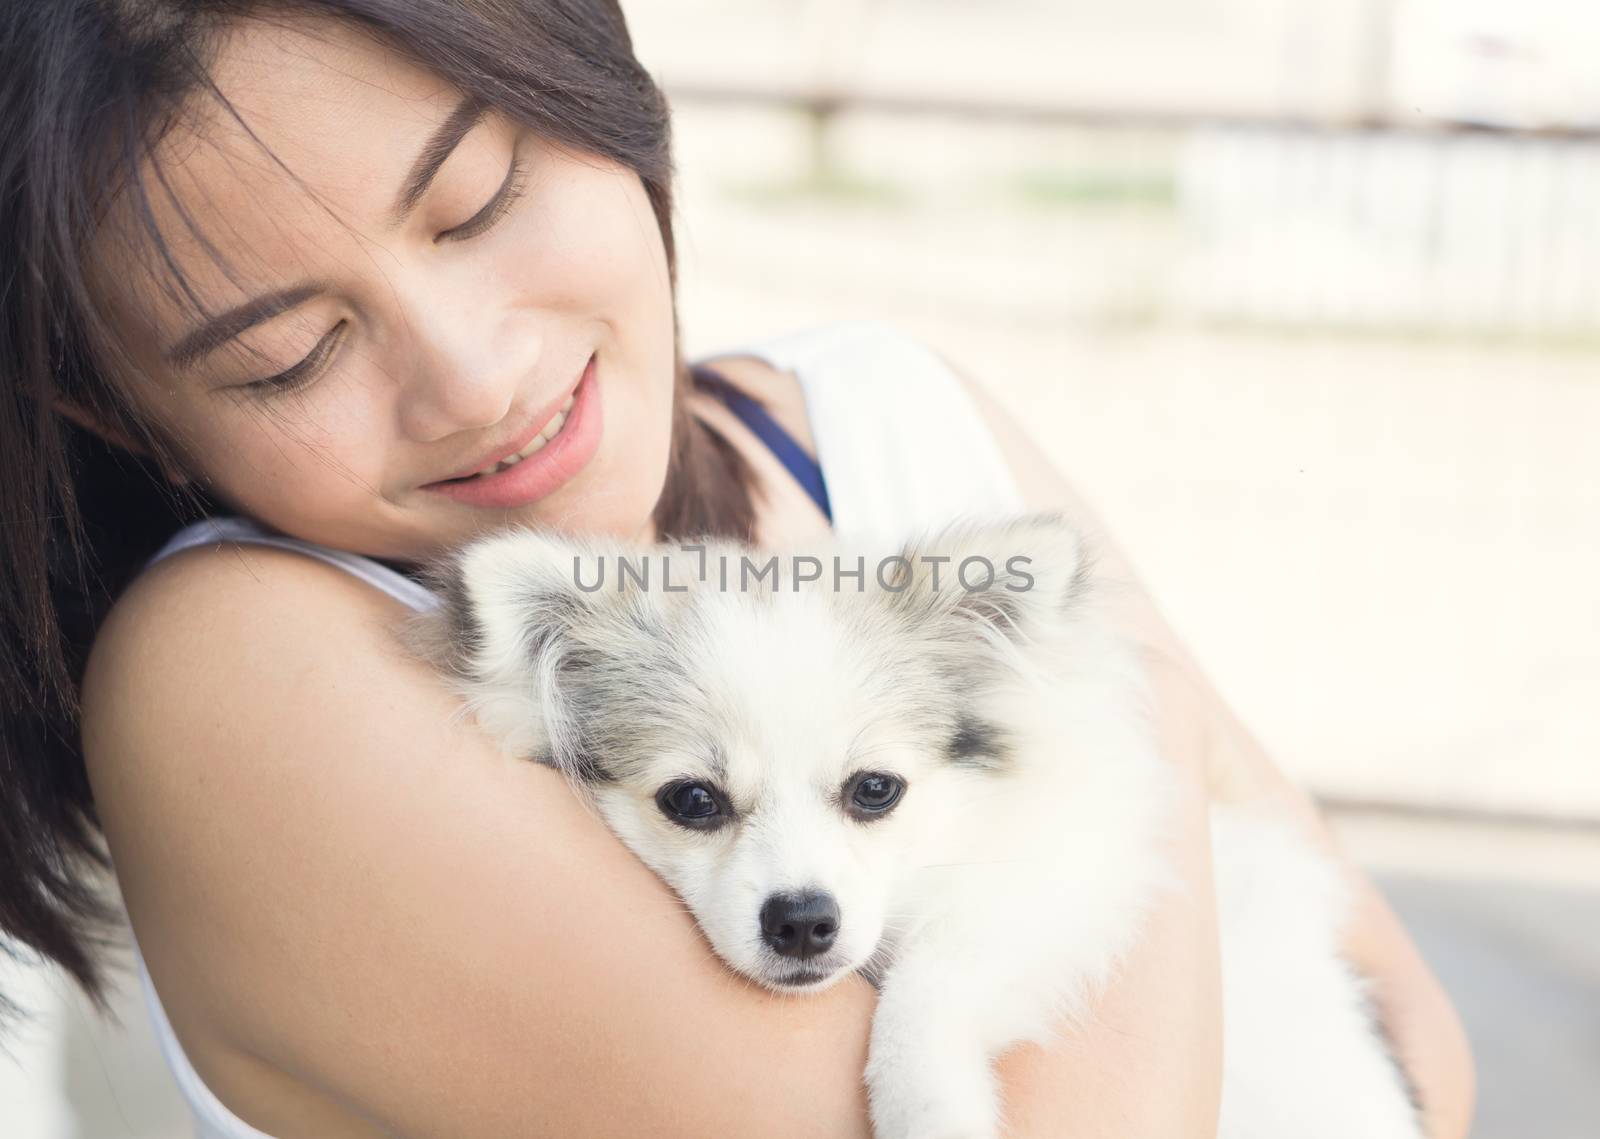 Closeup happy woman with white pomeranian dog on hand, pet healt by pt.pongsak@gmail.com